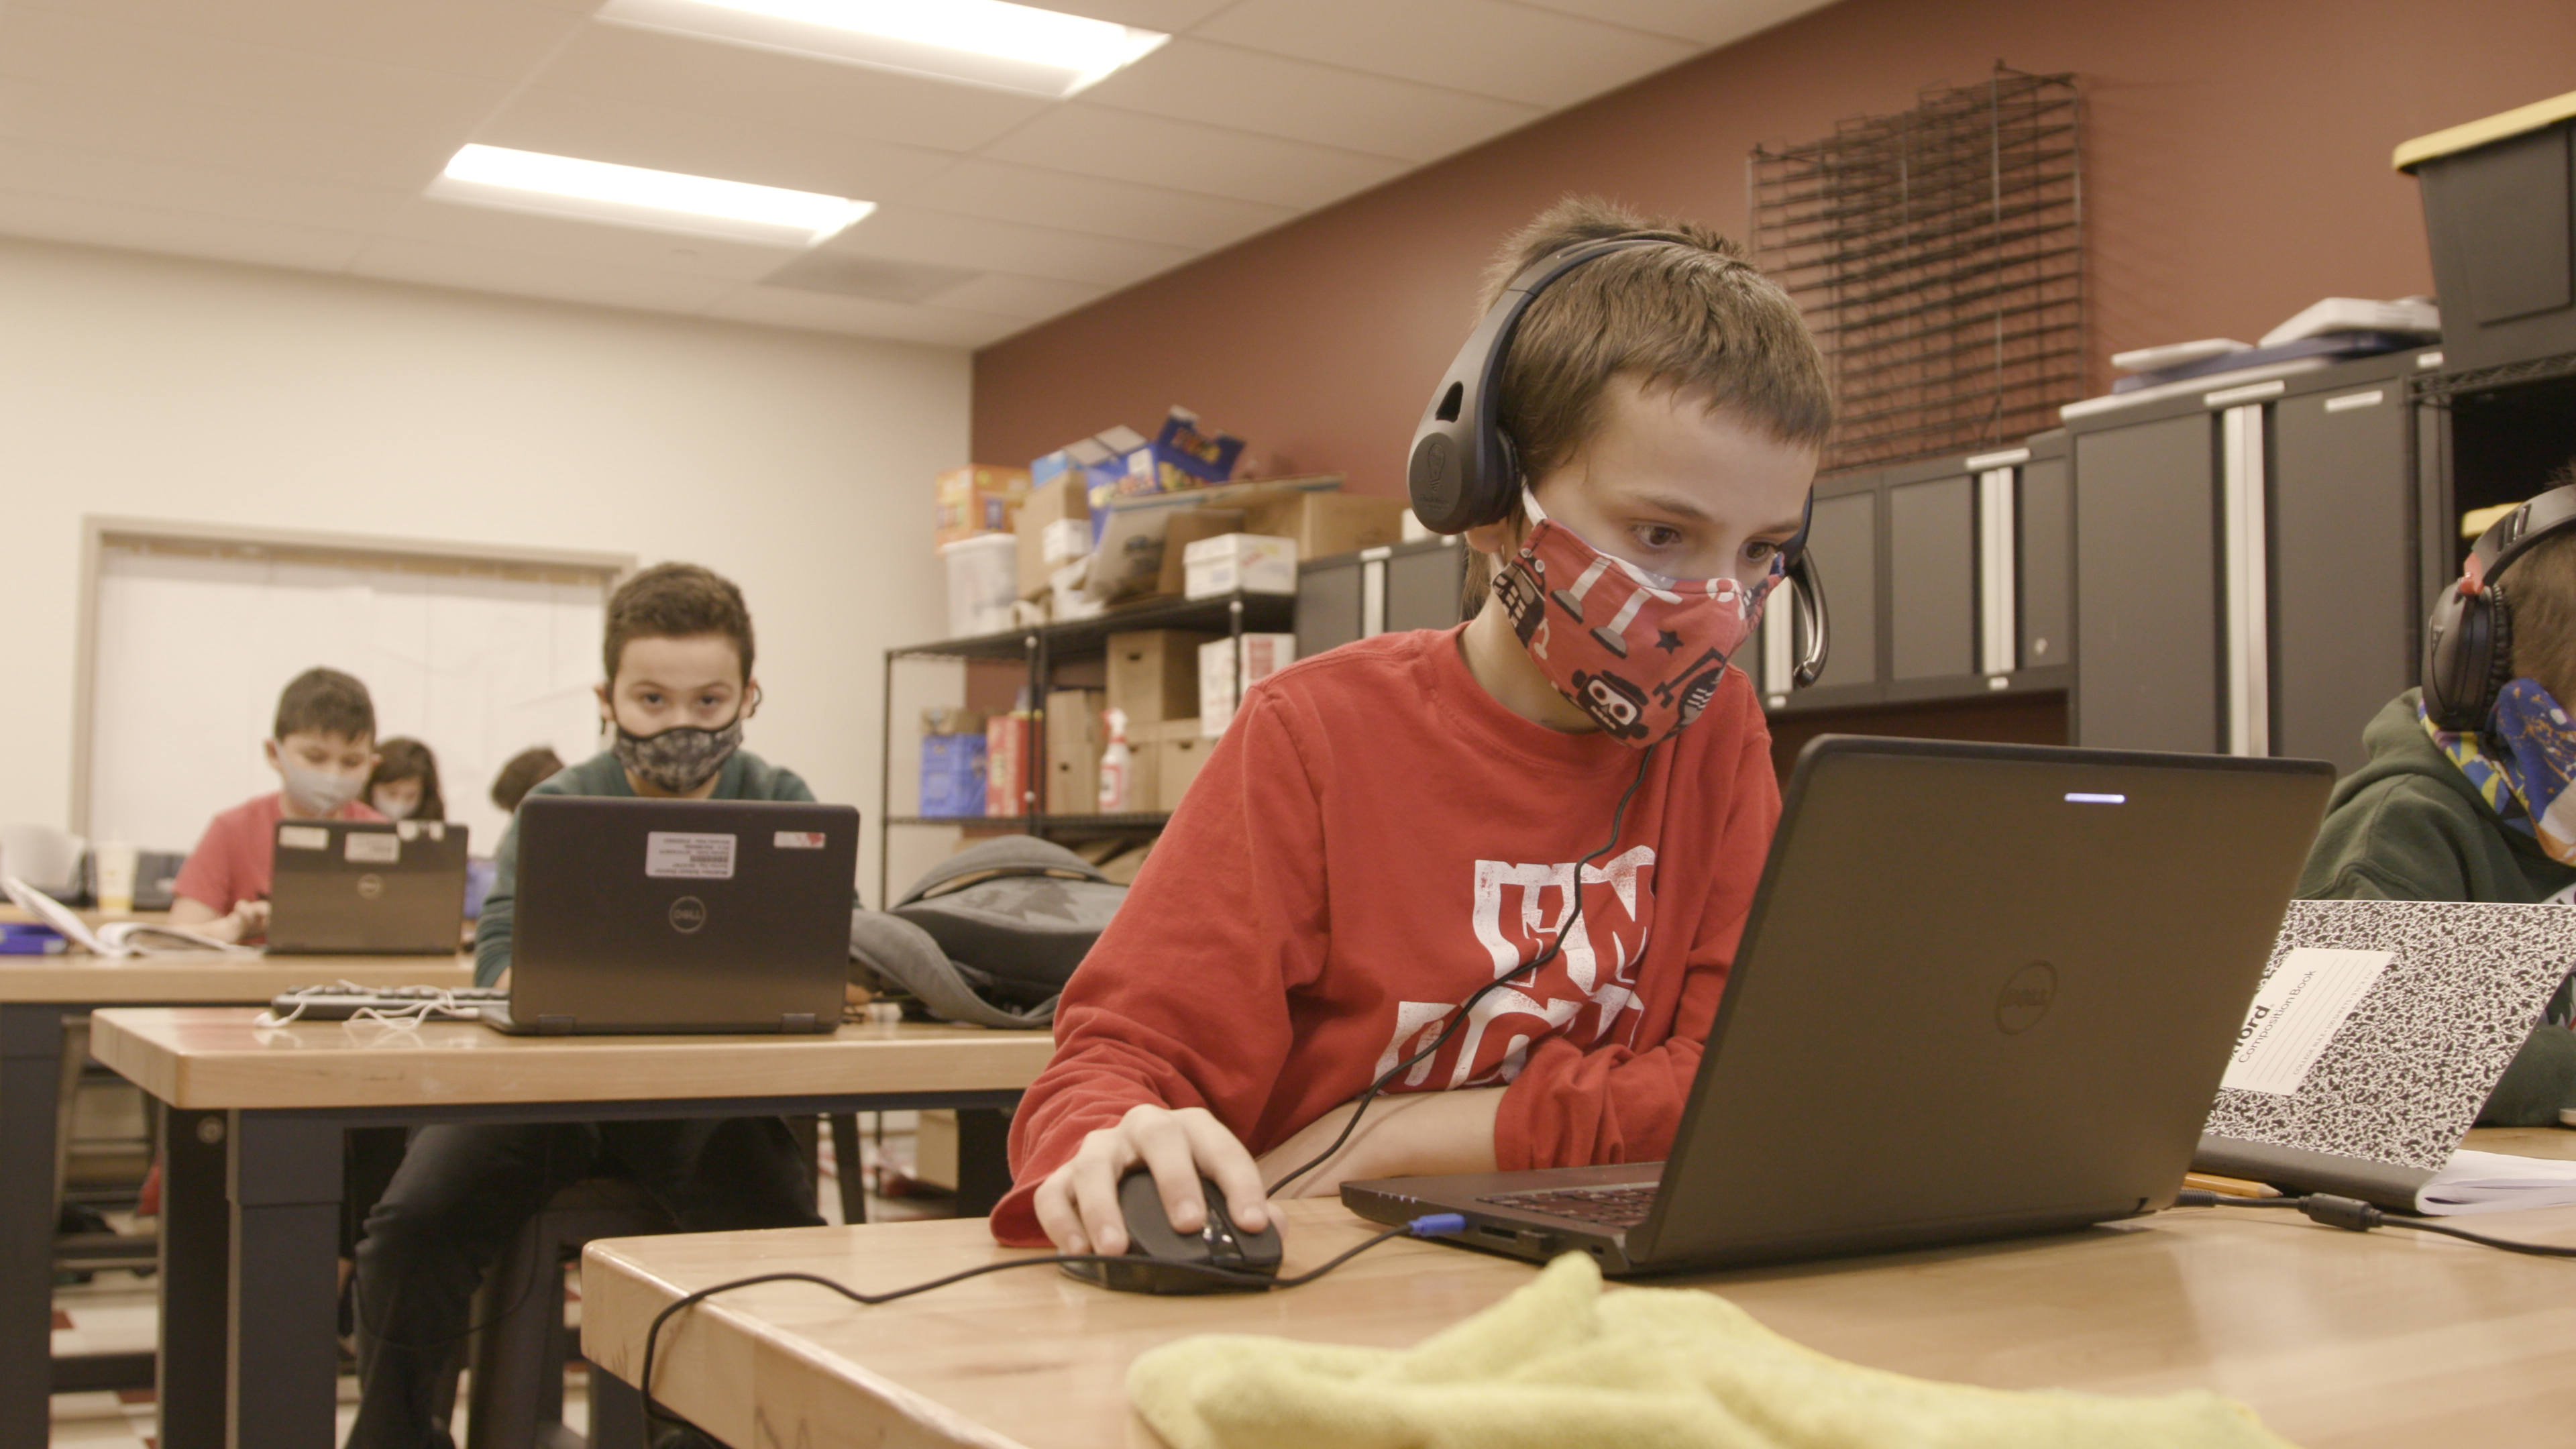 Children work at laptops while wearing masks